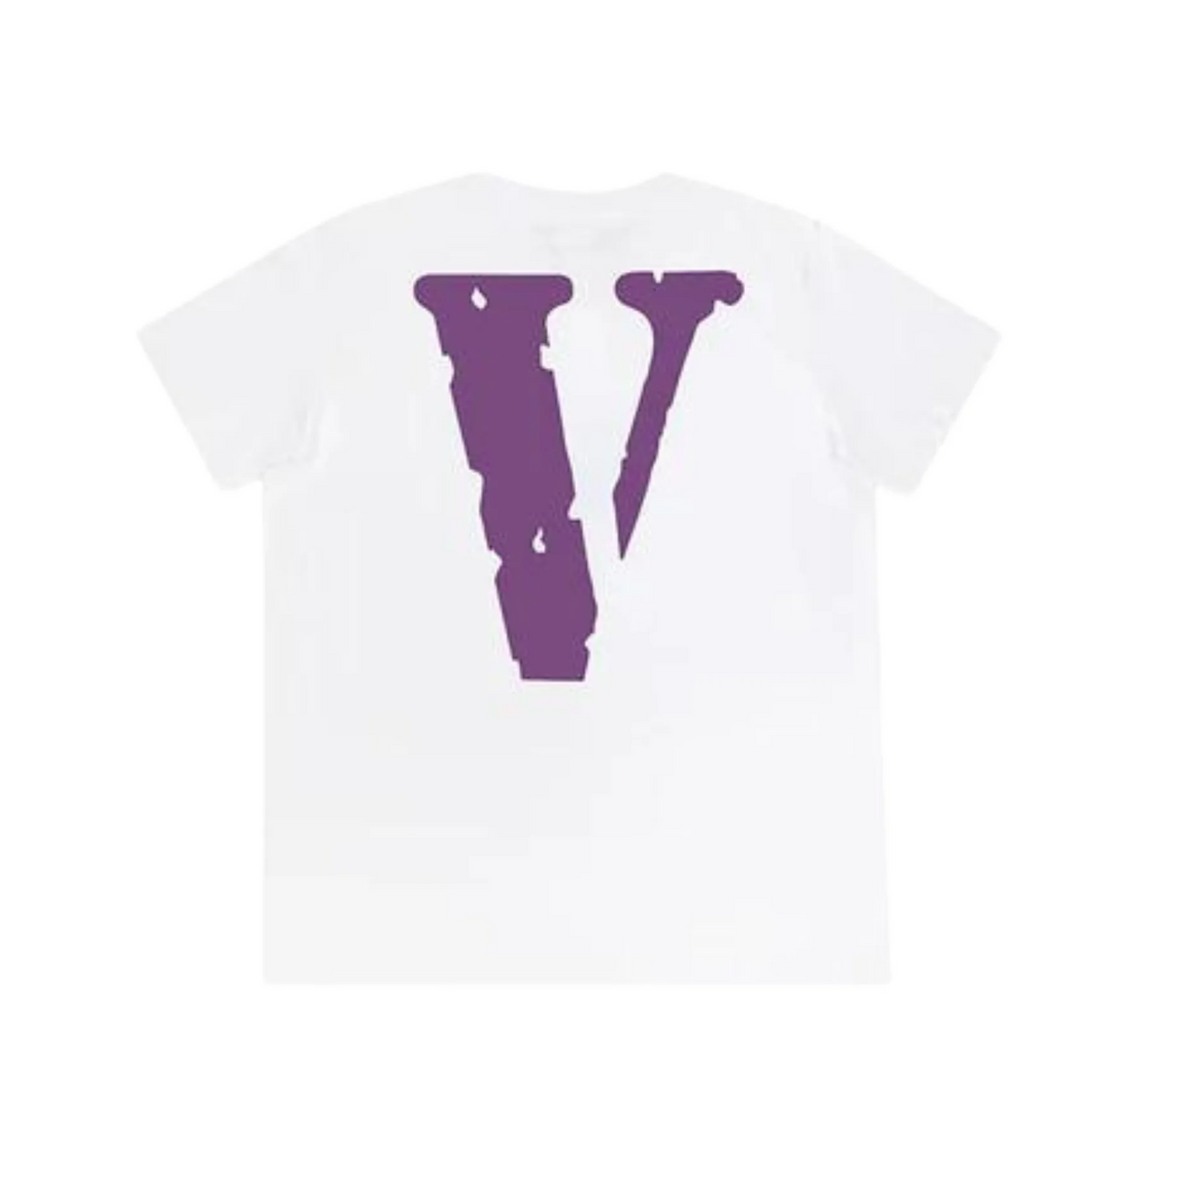 Vlone Friends T-shirt "White/Purple"